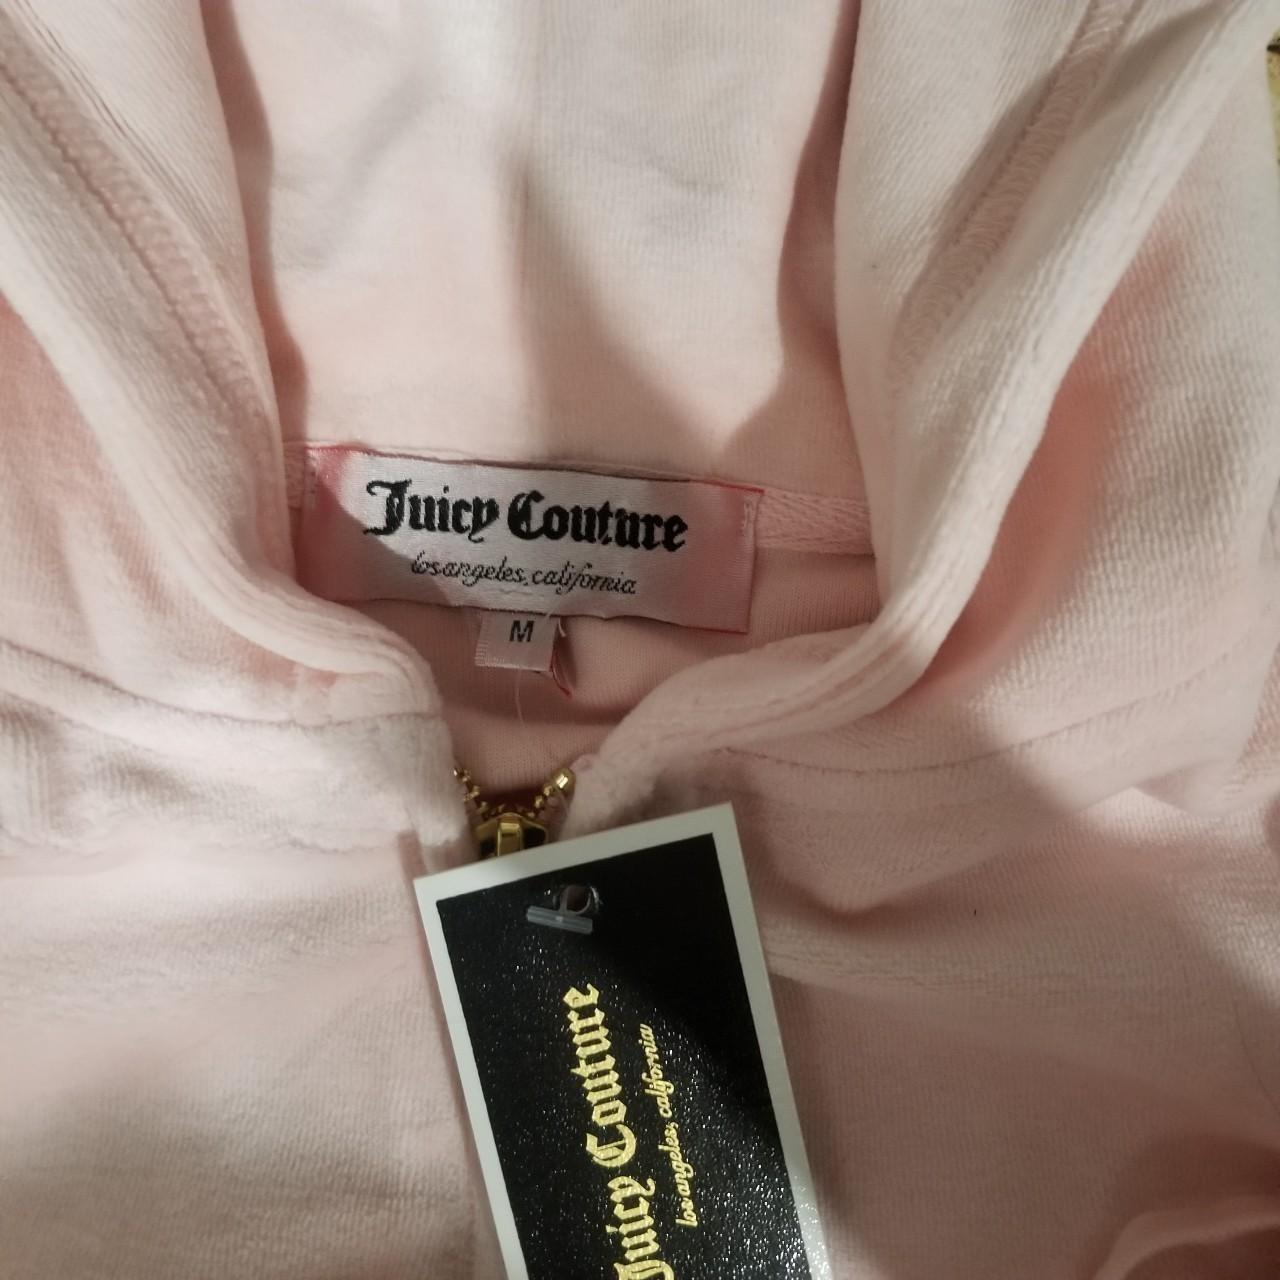 Pink Juicy Couture Tracksuit Set (Medium)